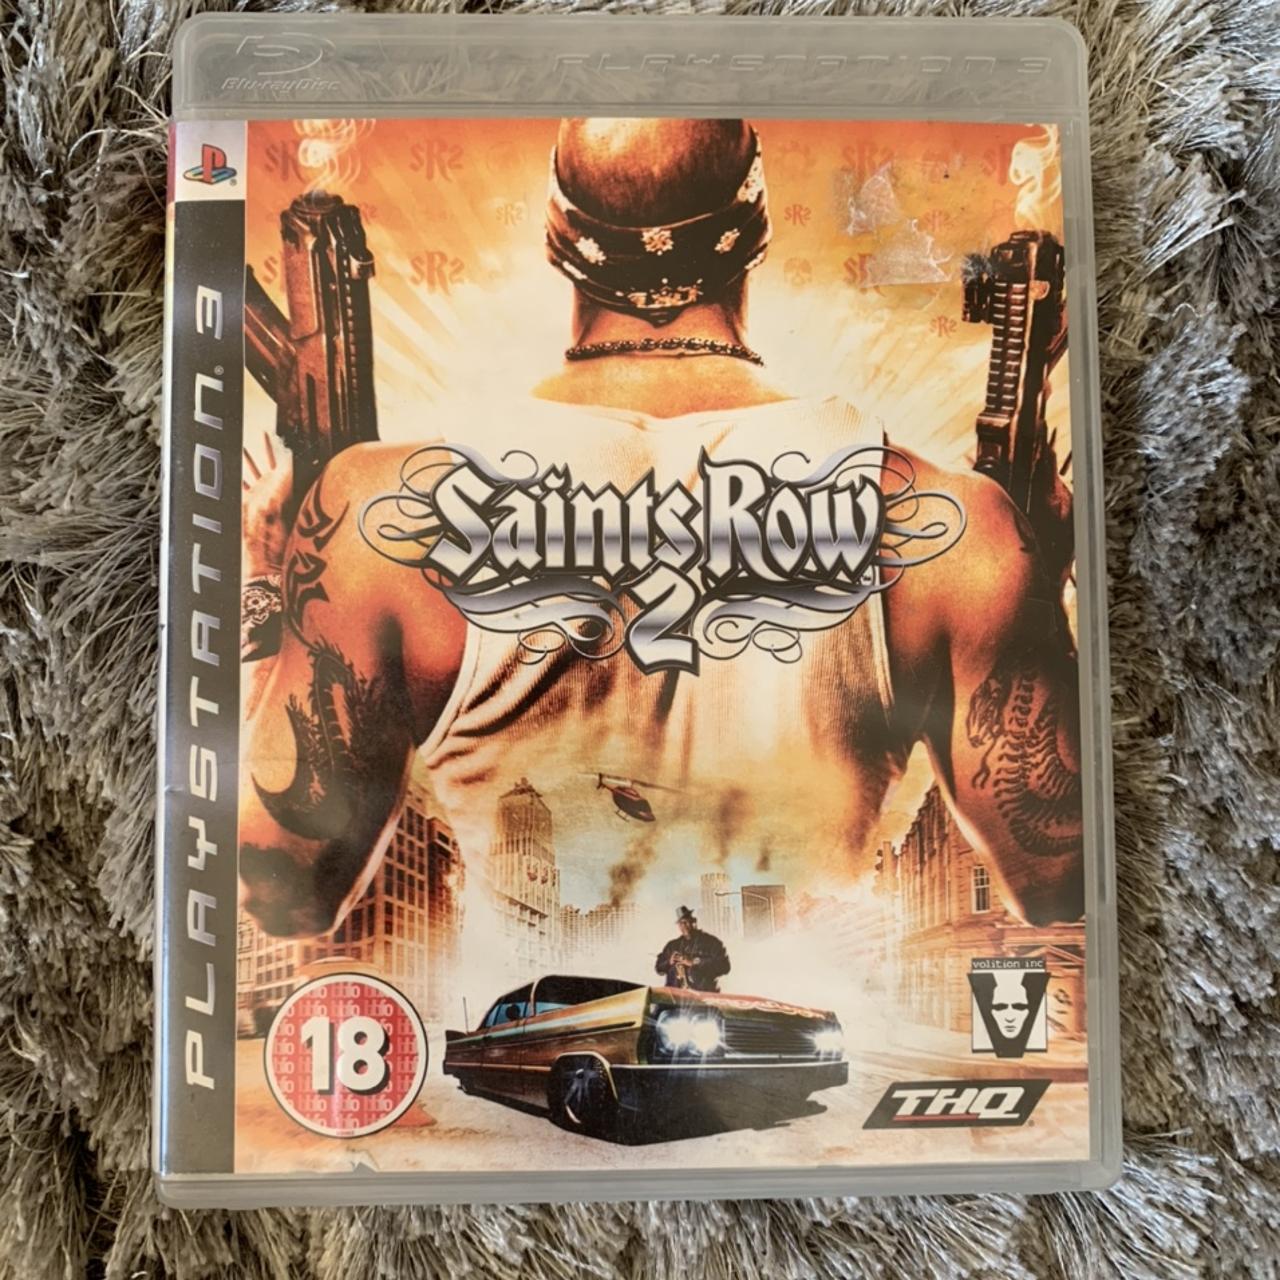 Saints Row 2 (Usado) - PS3 - Shock Games